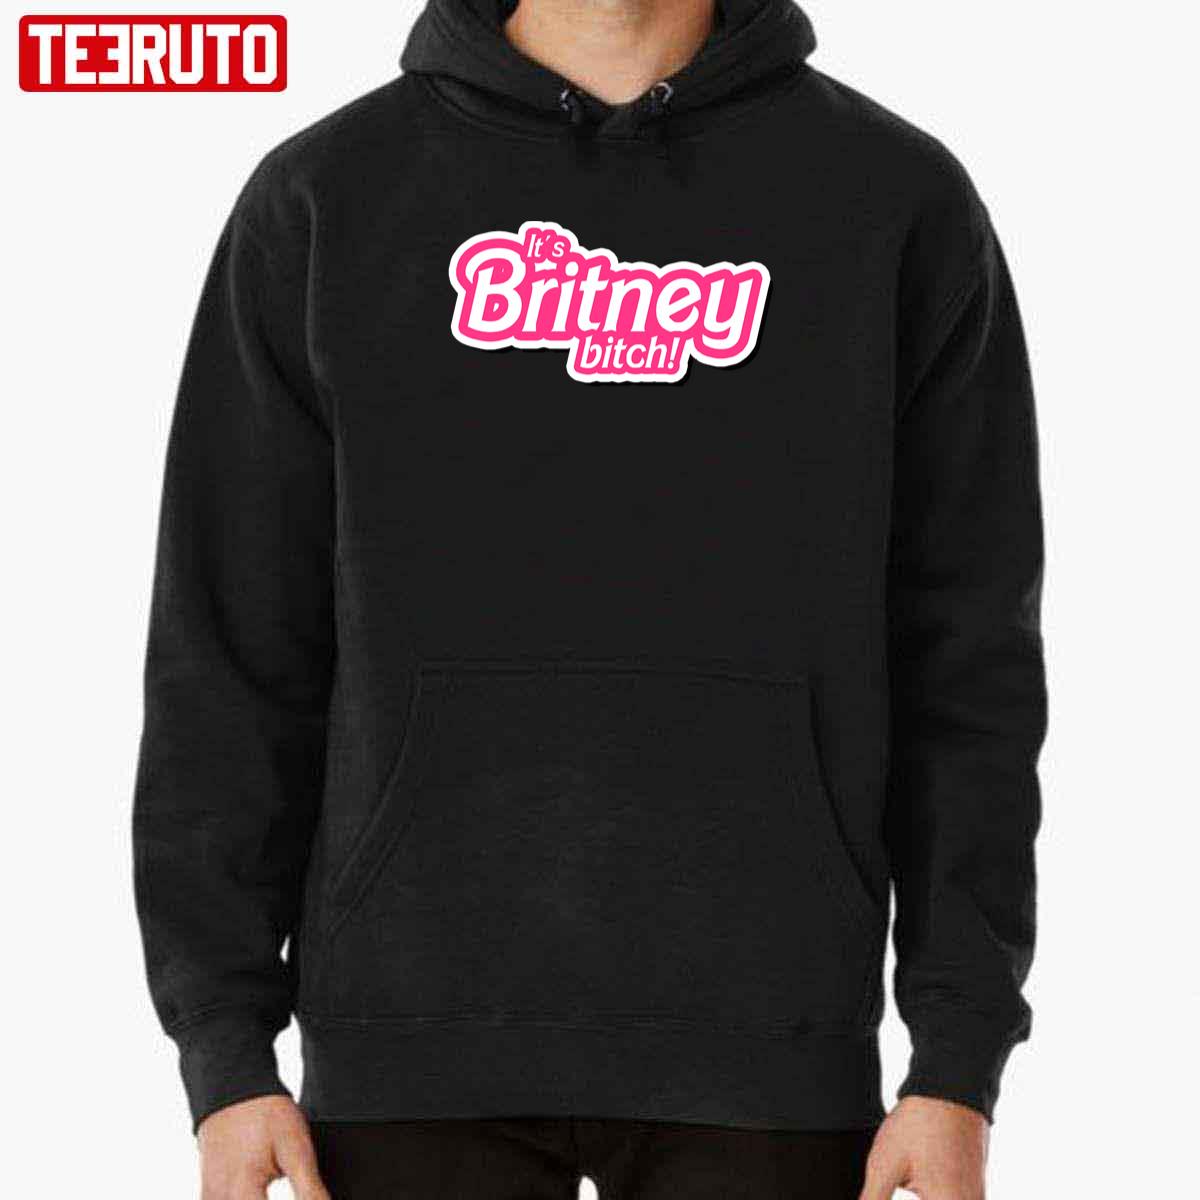 It's Britney Spears Bitch Unisex Sweatshirt